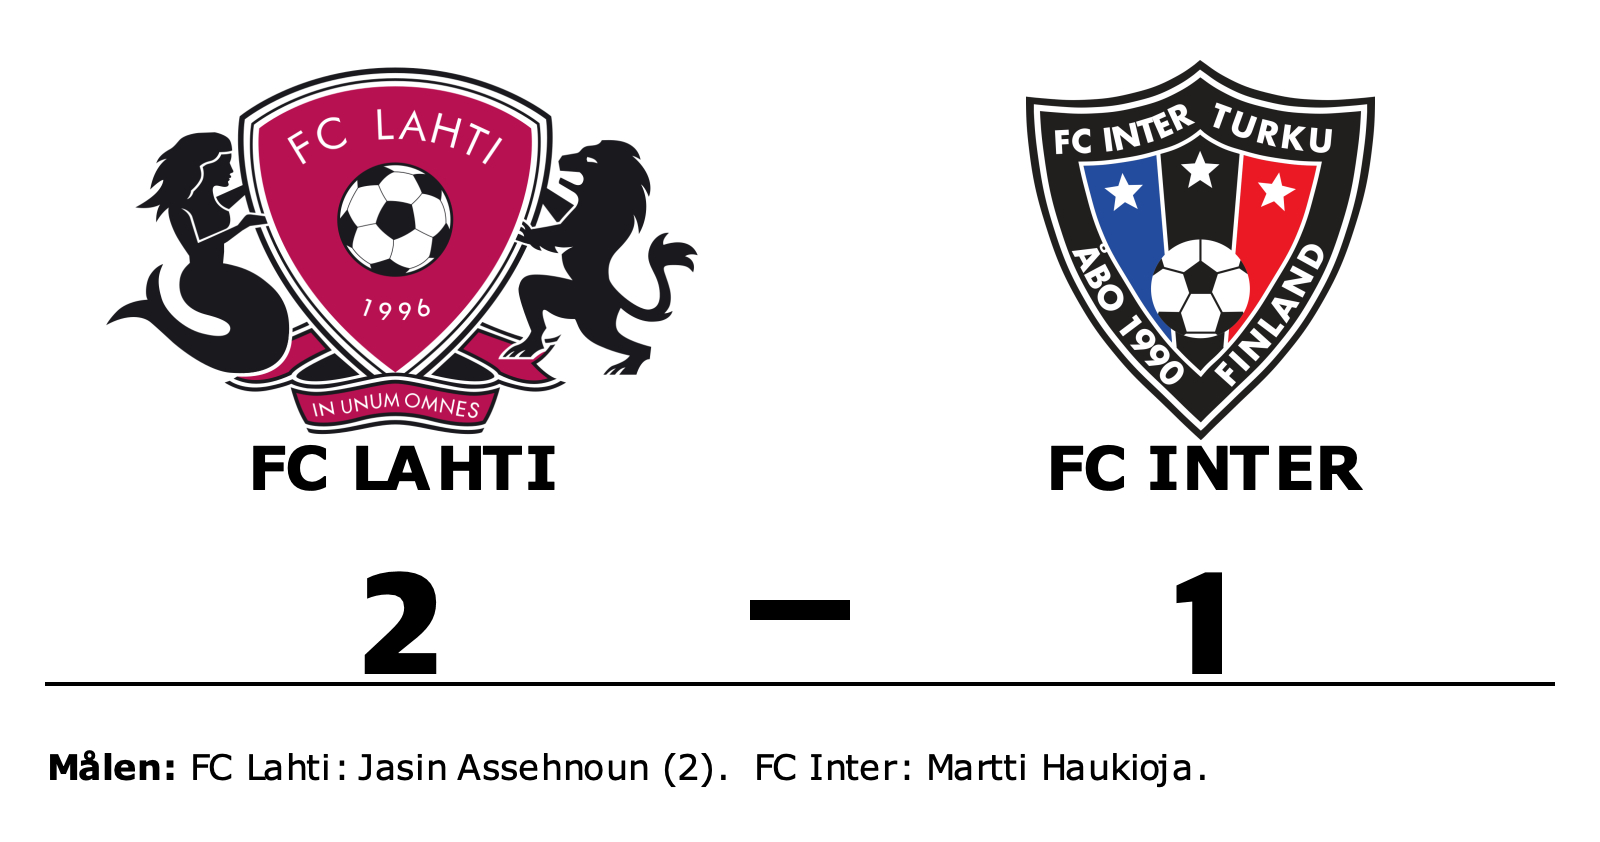 FC Lahti vann mot FC Inter